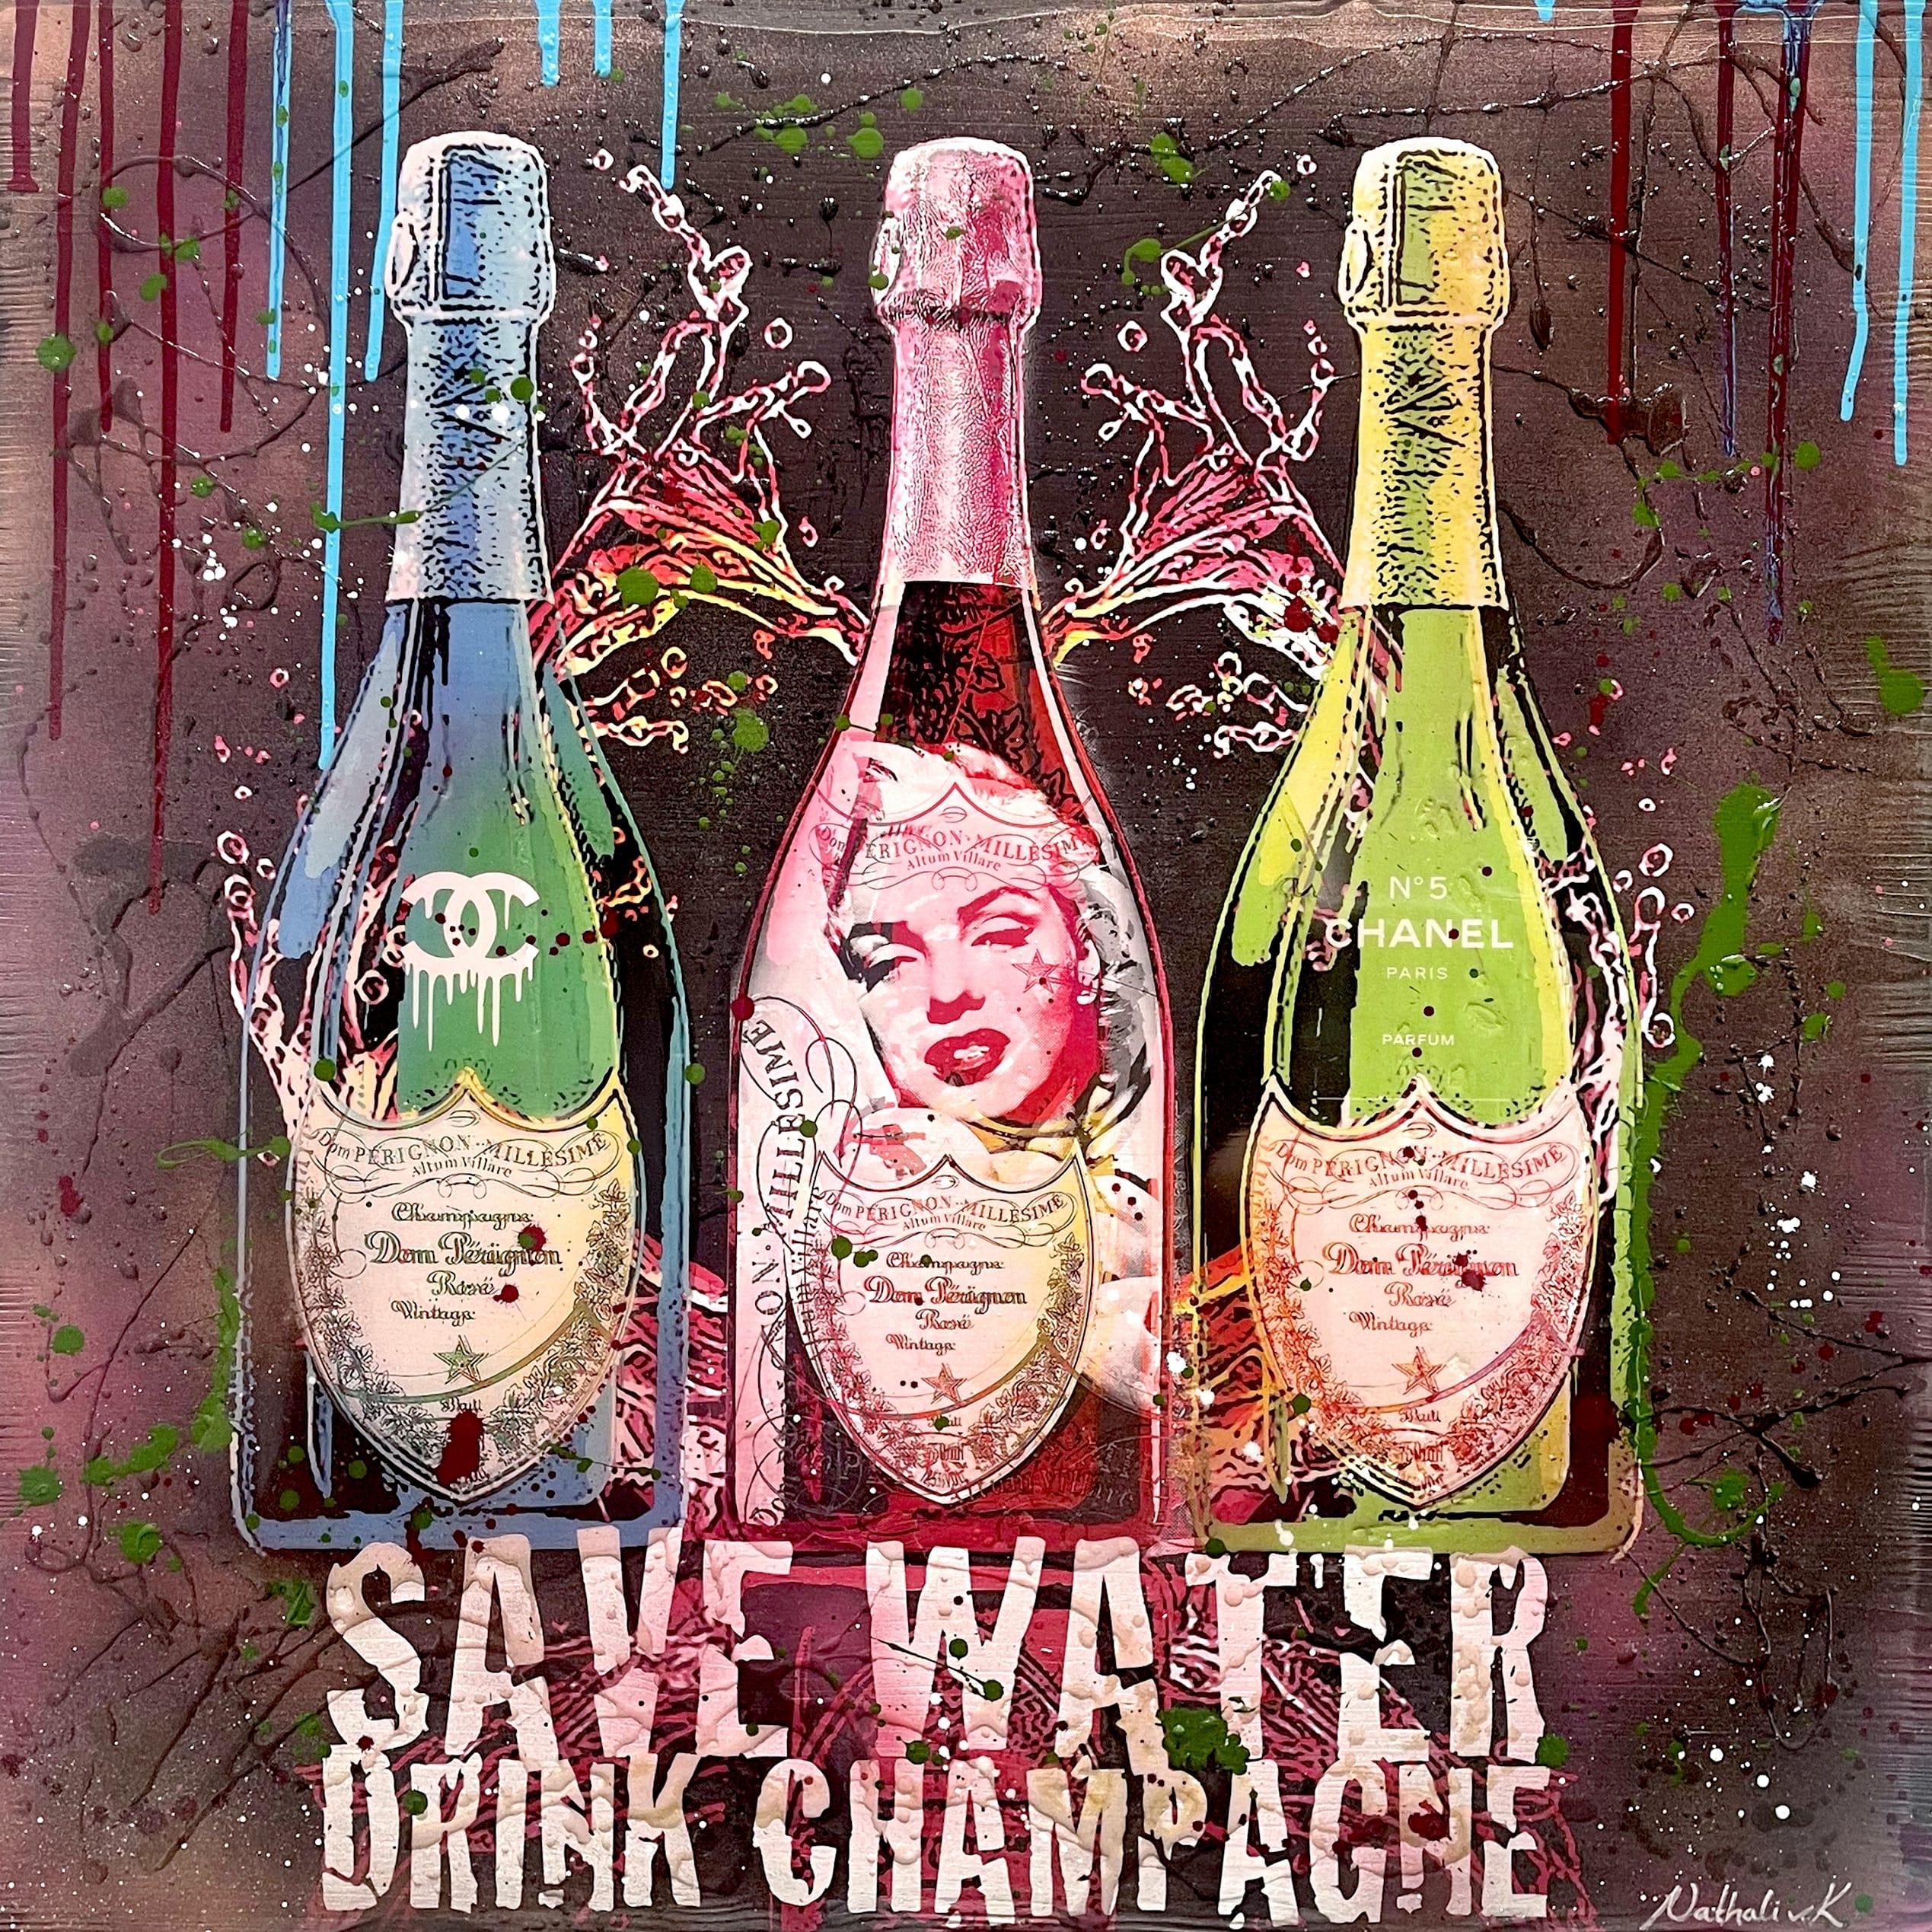 Nathali von Kretschmann Peinture Pop-Up "Save Water Drink Champagne" trois bouteilles de Dom Pérignon